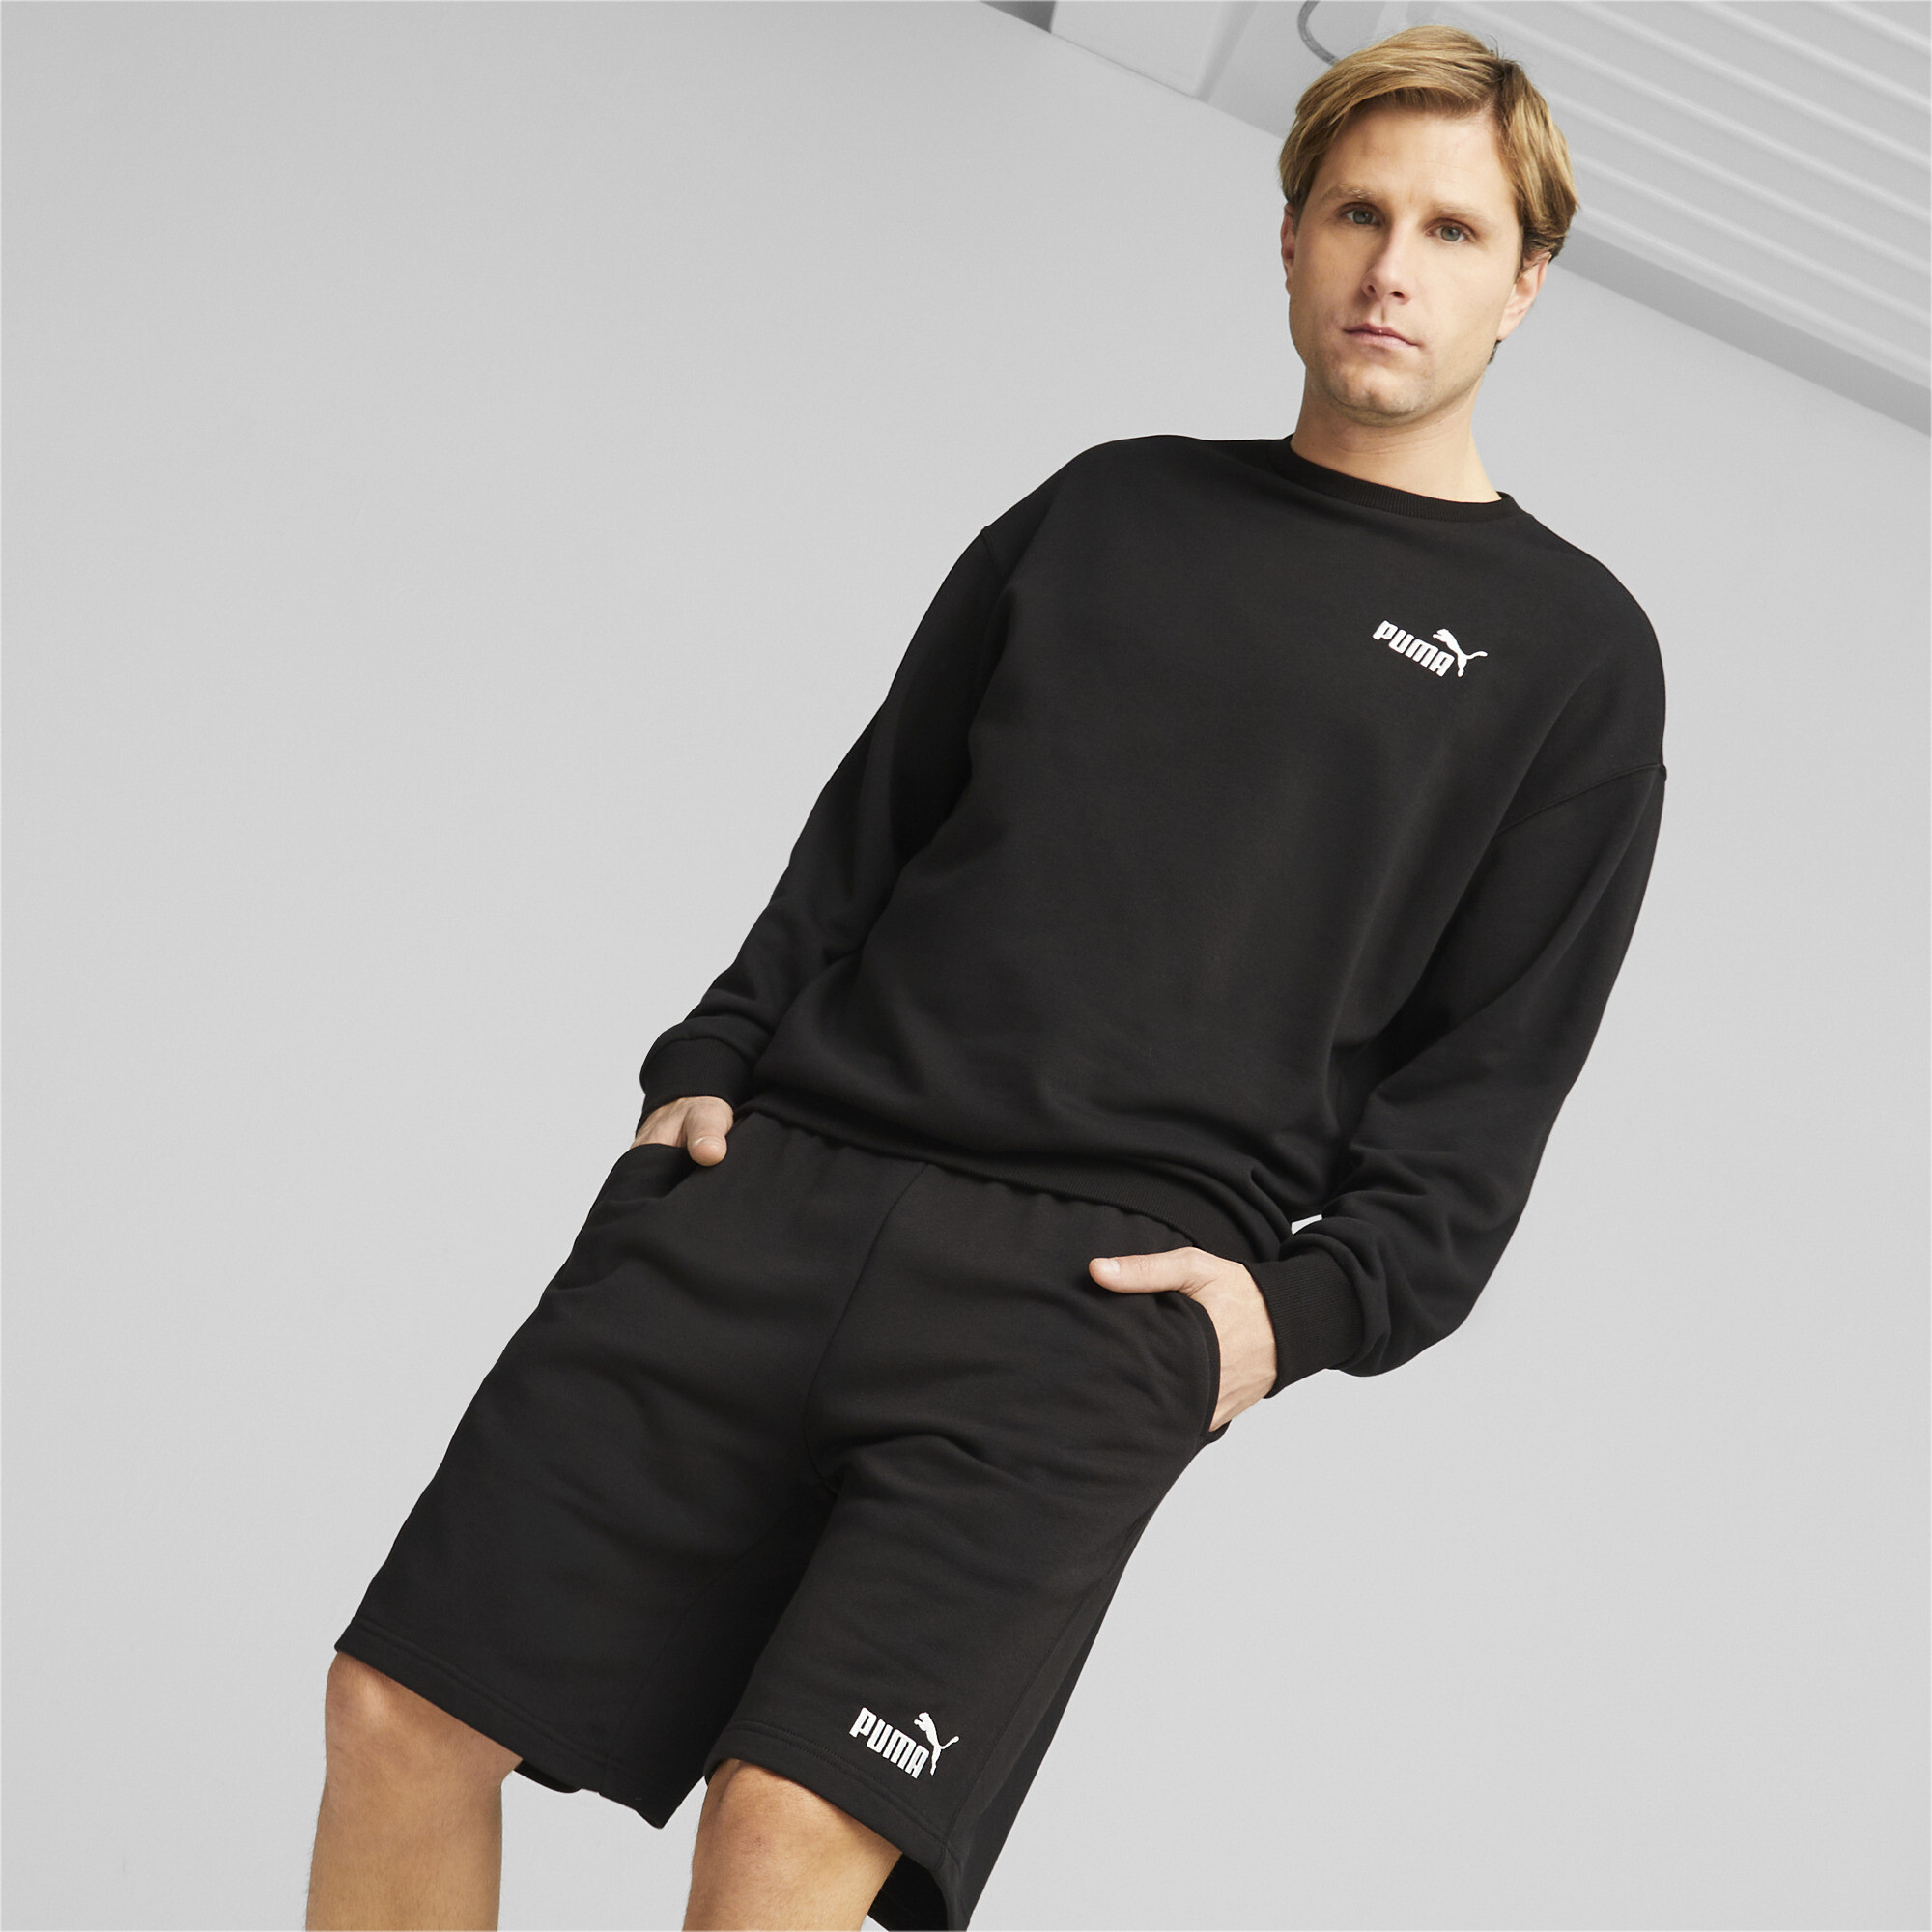 Men's Puma Relaxed Sweatsuit, Black, Size XXL, Clothing